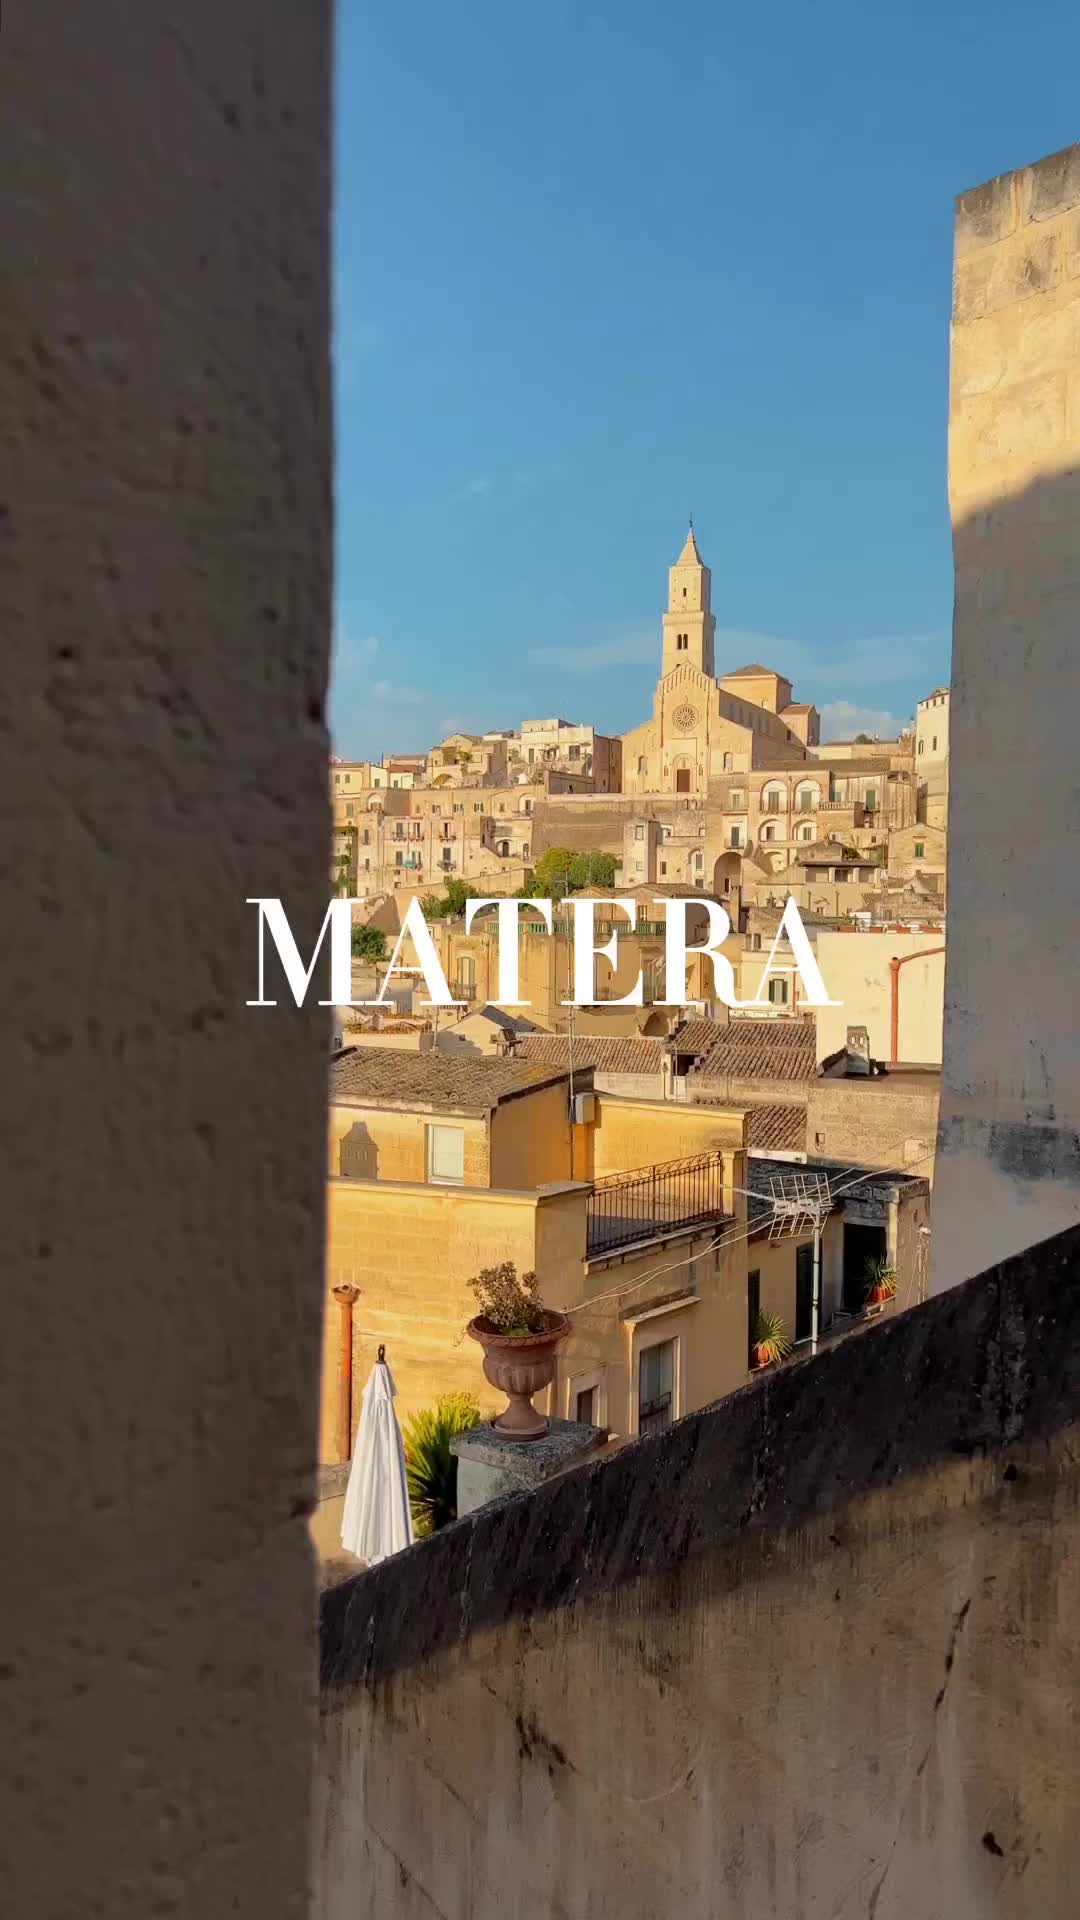 Matera, Italy's Ancient City of Wonders